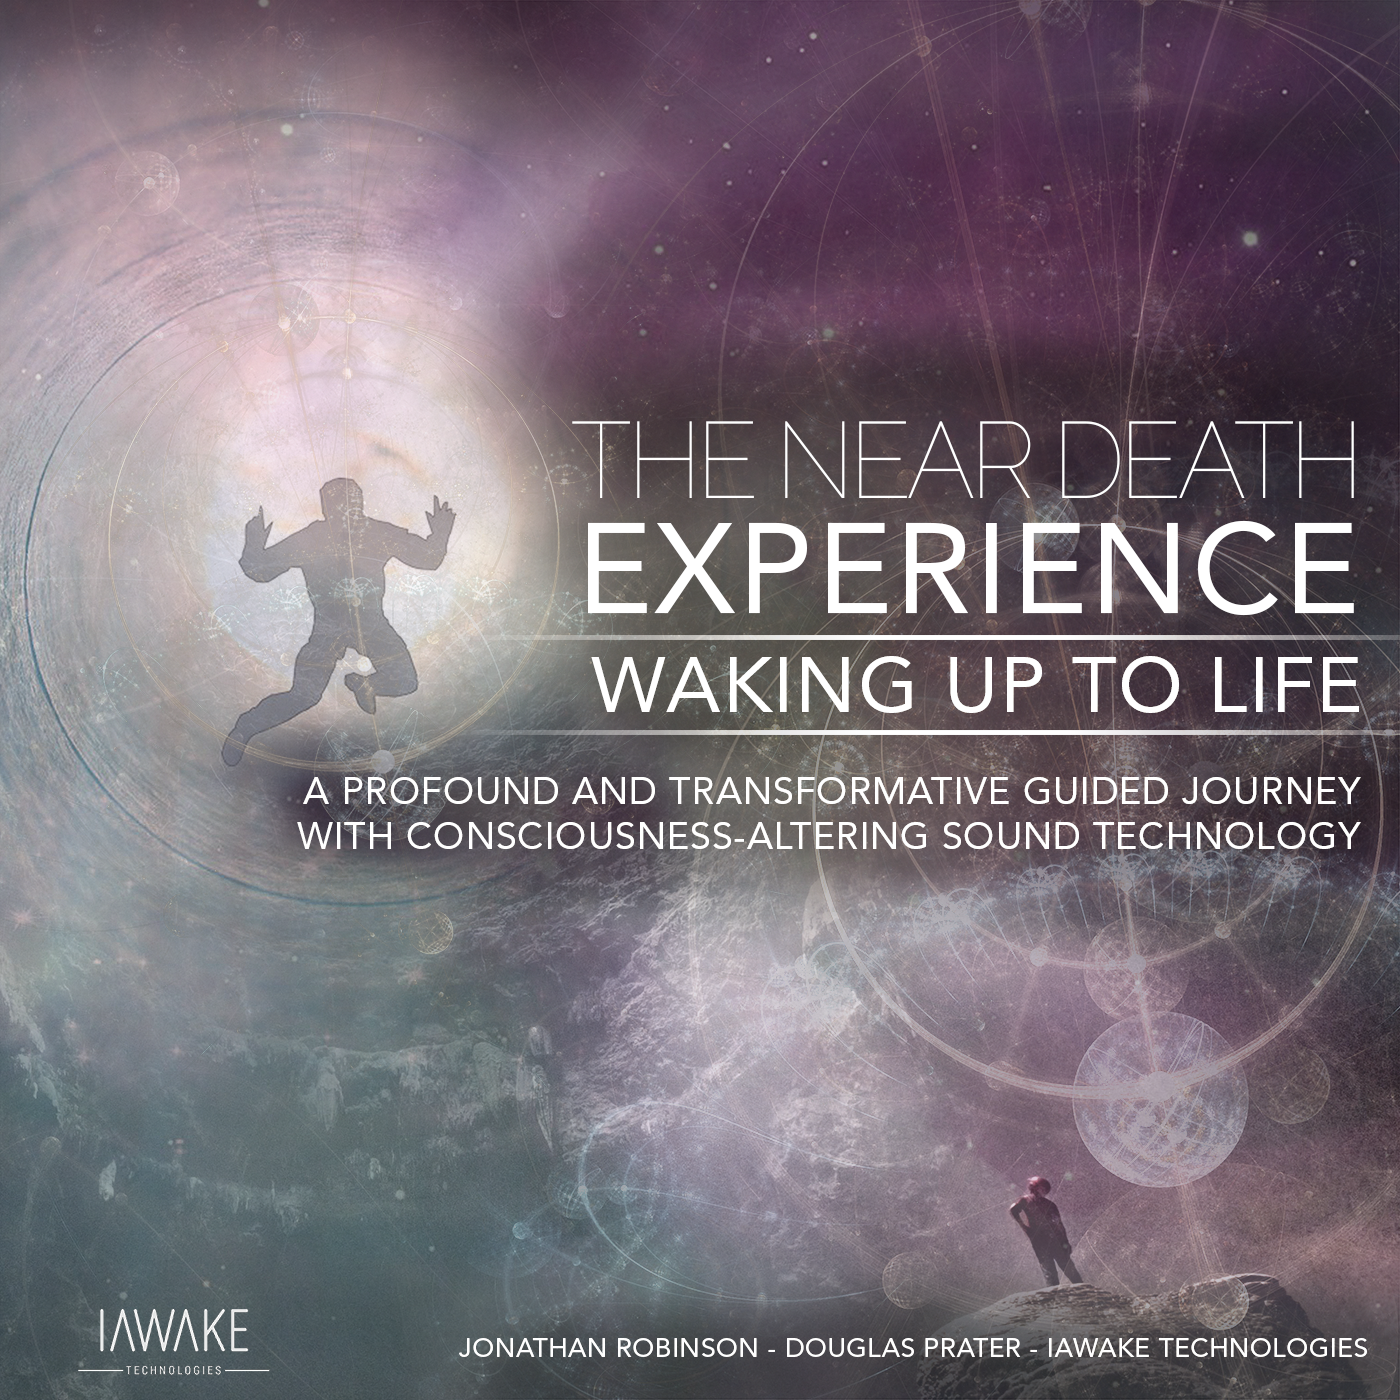 The Near Death Experience; Waking Up to Life - iAwake Technologies